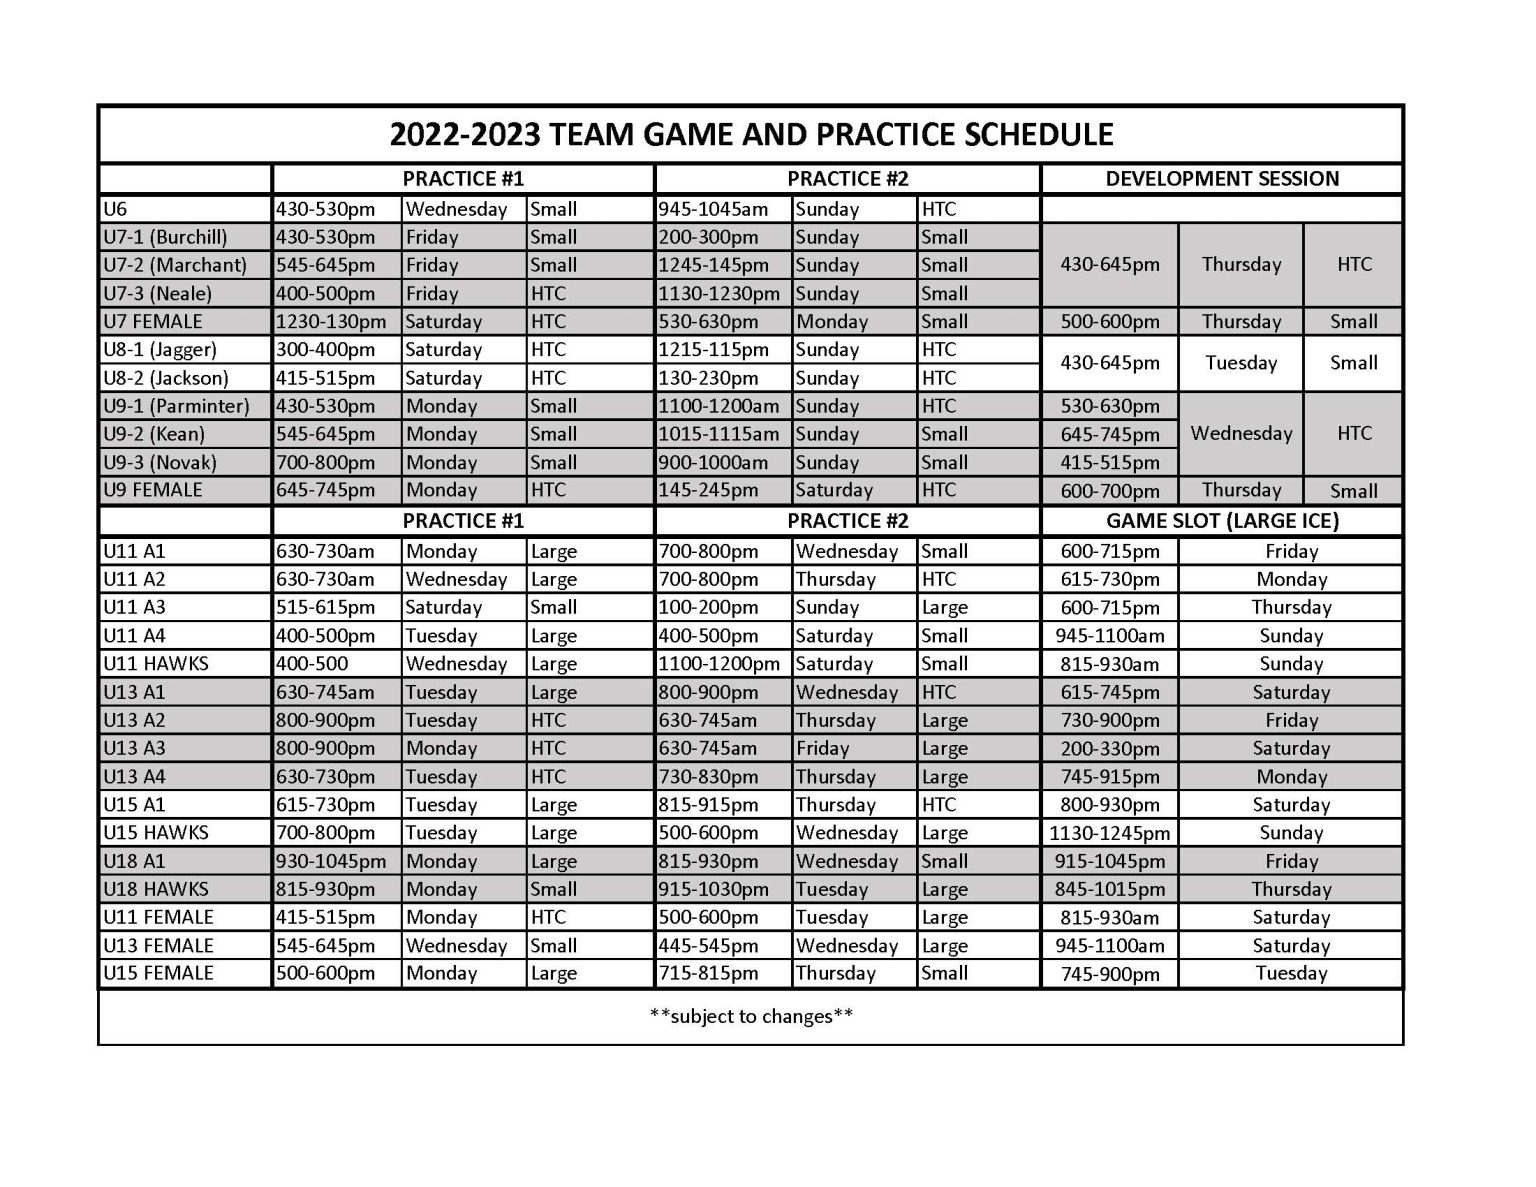 2022-2023 Team Game & Practice Schedule - North Shore Winter Club